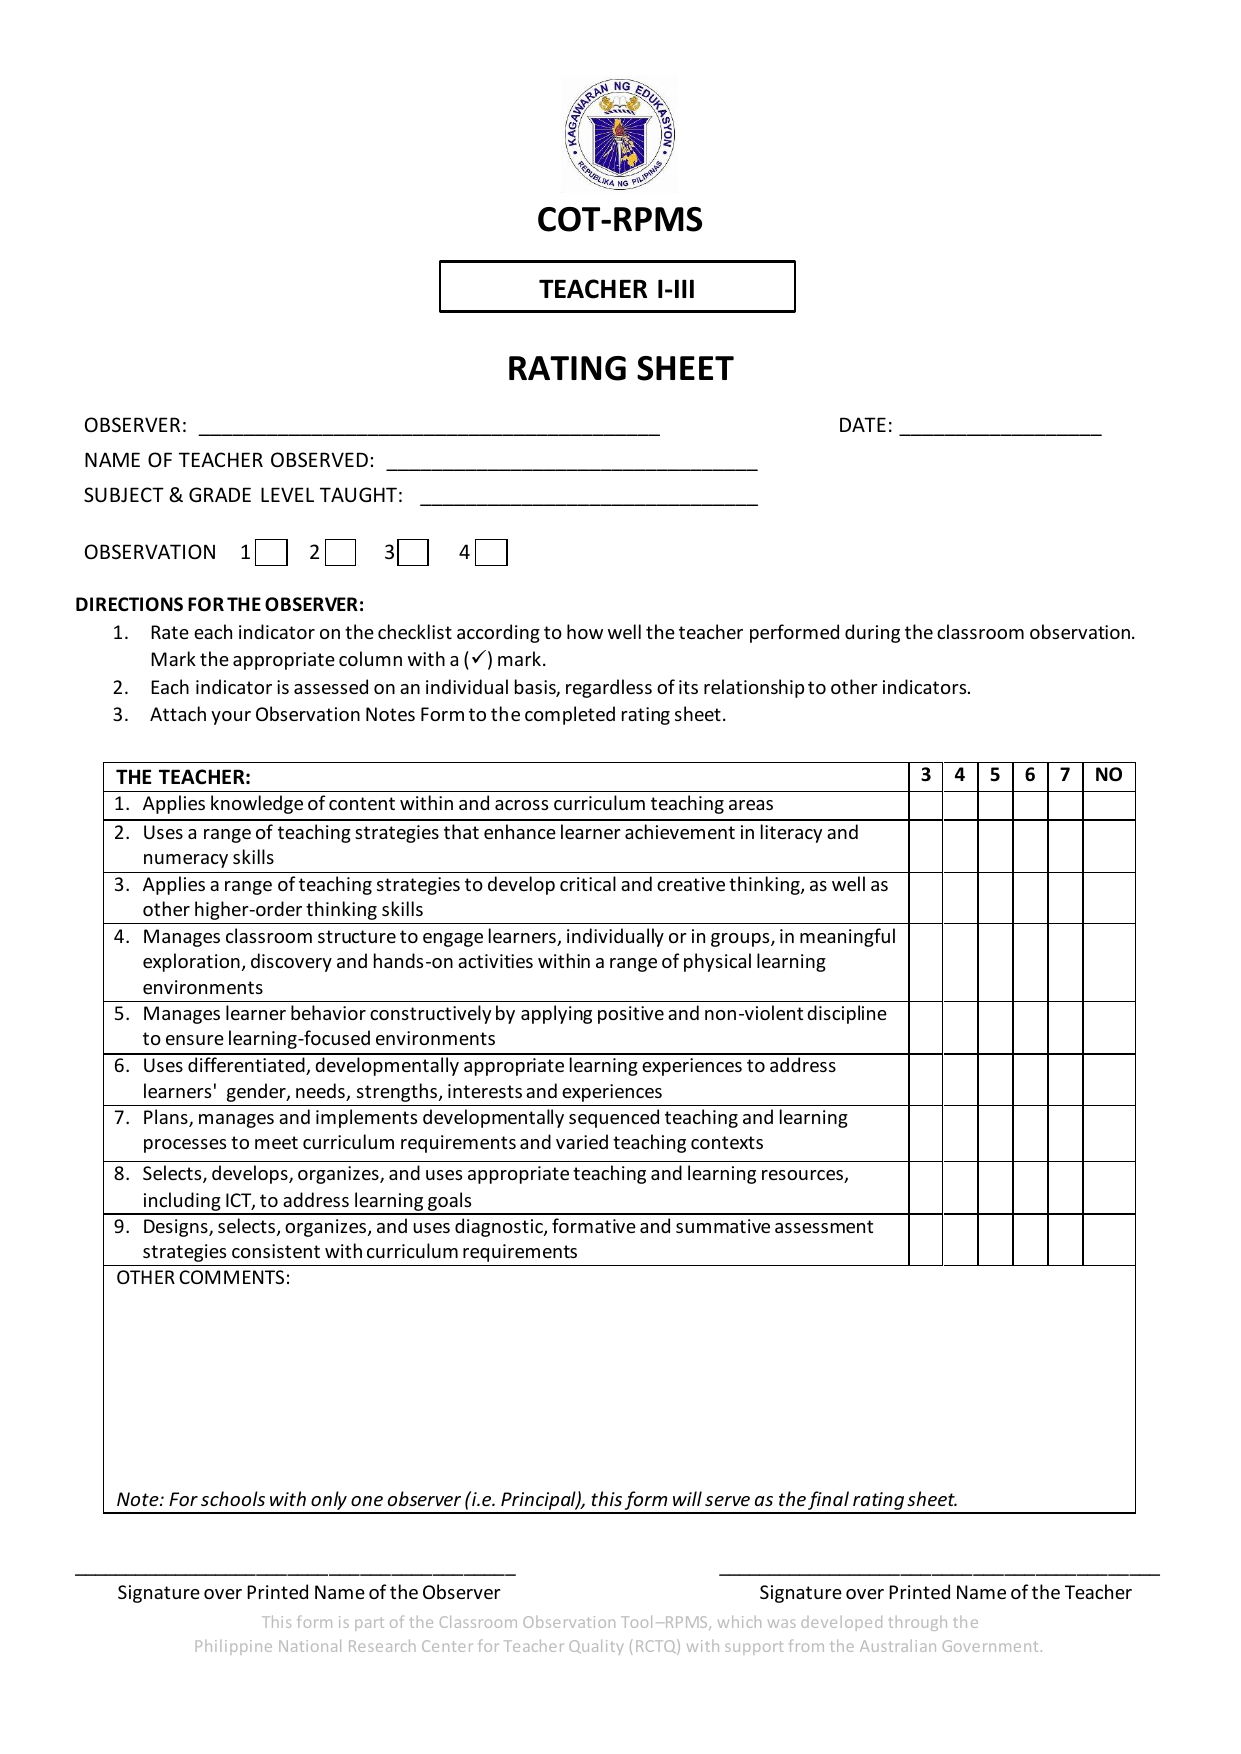 rating-sheet-teacher-i-iii-051018